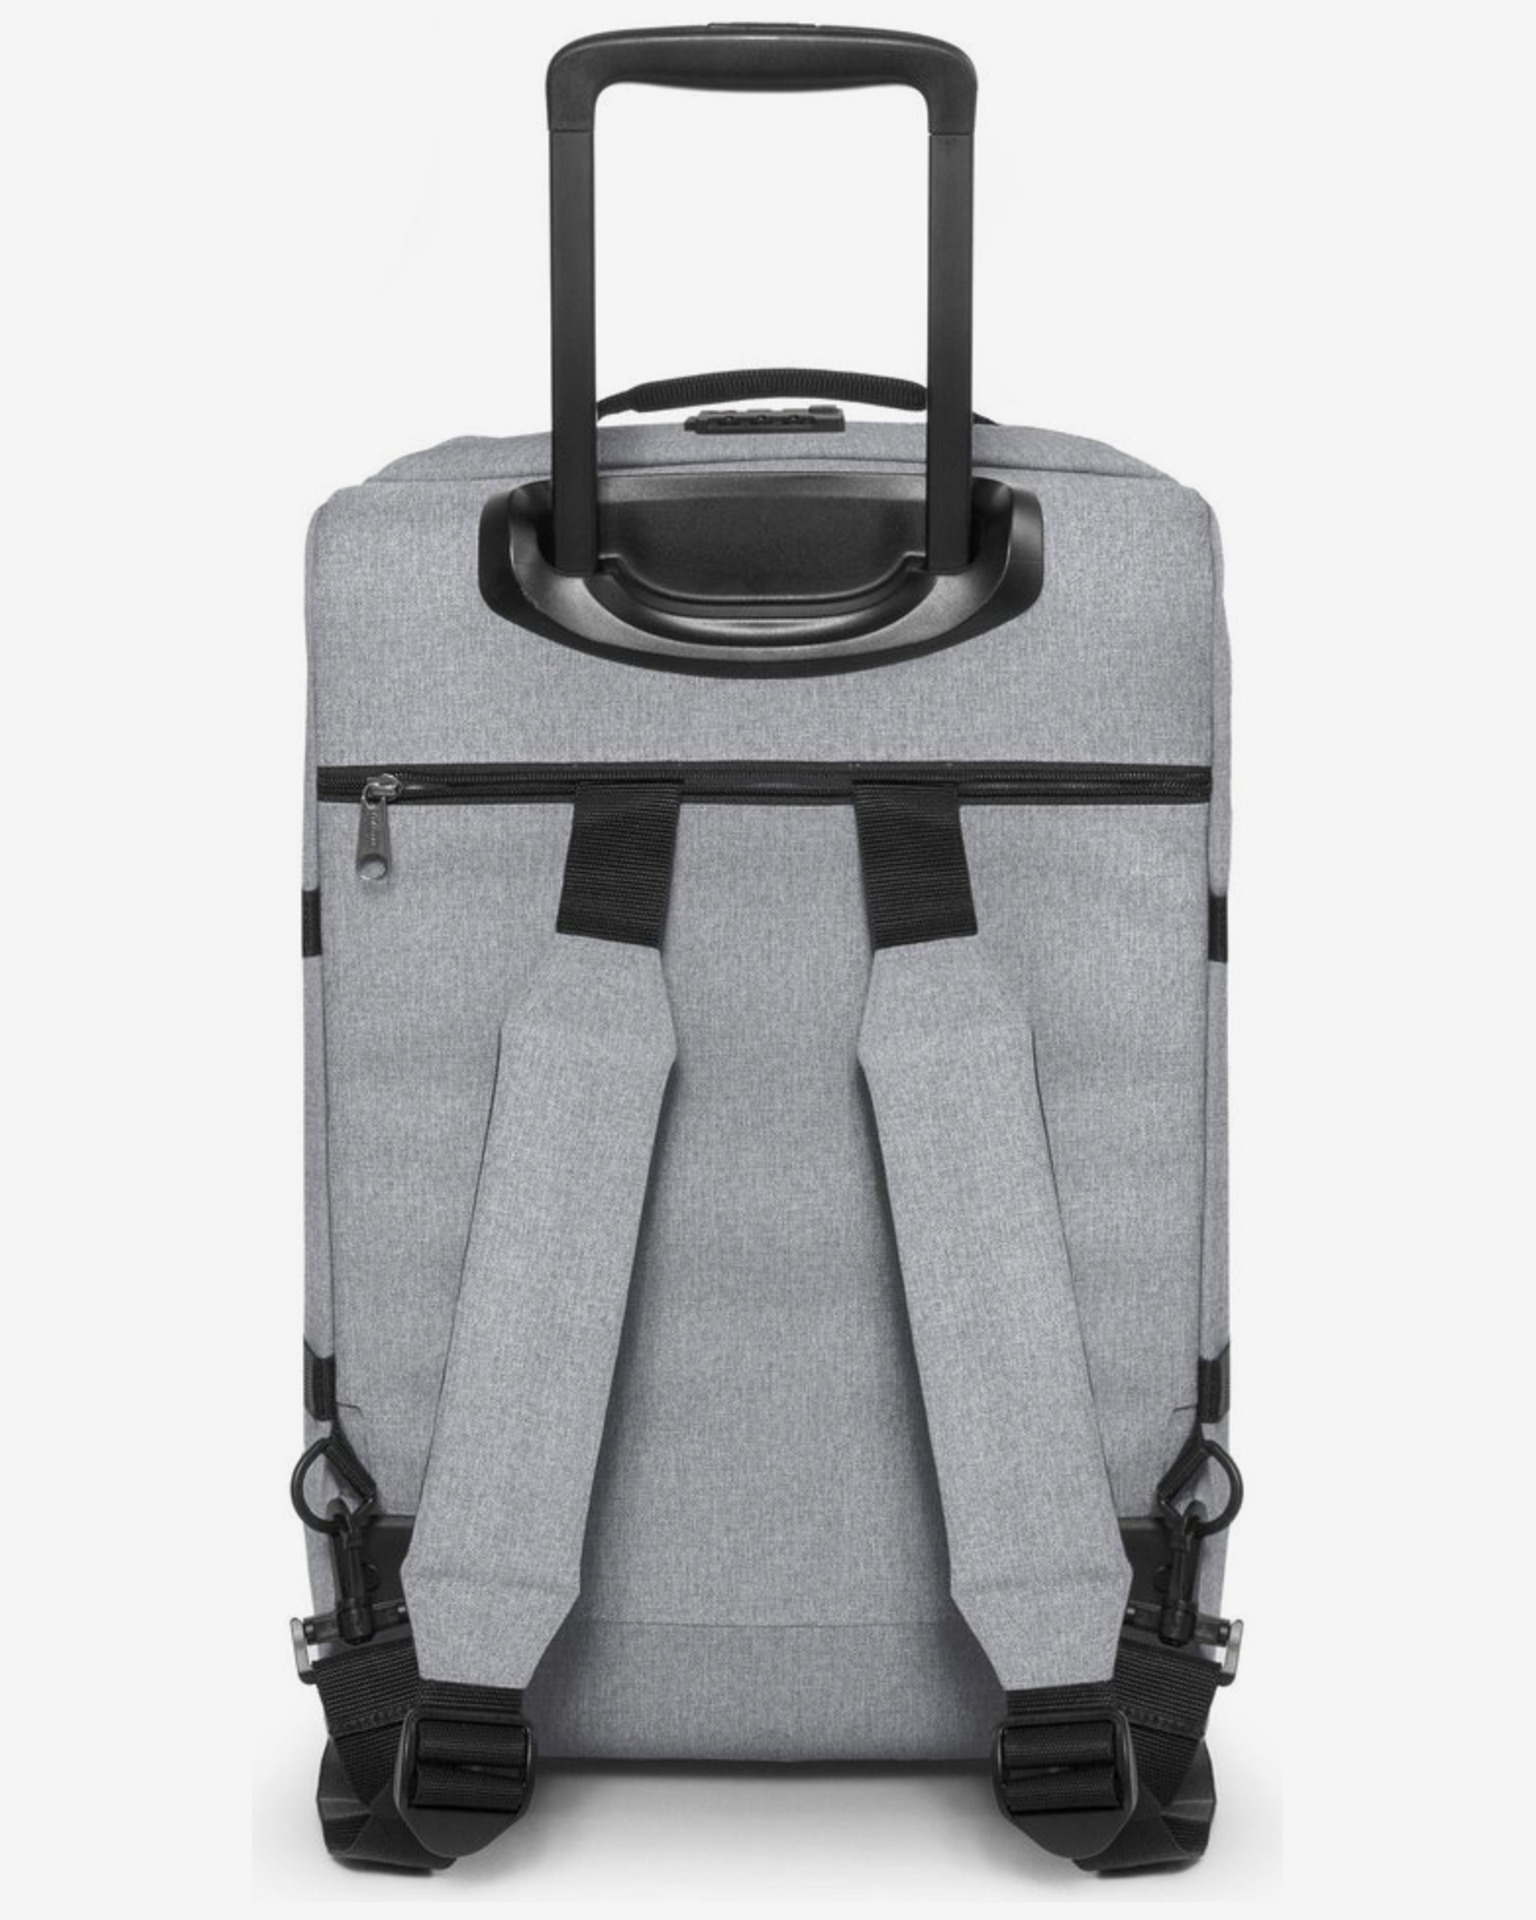 bout elke keer Merchandiser Eastpak - Strapverz Small Suitcase Bibloo.com